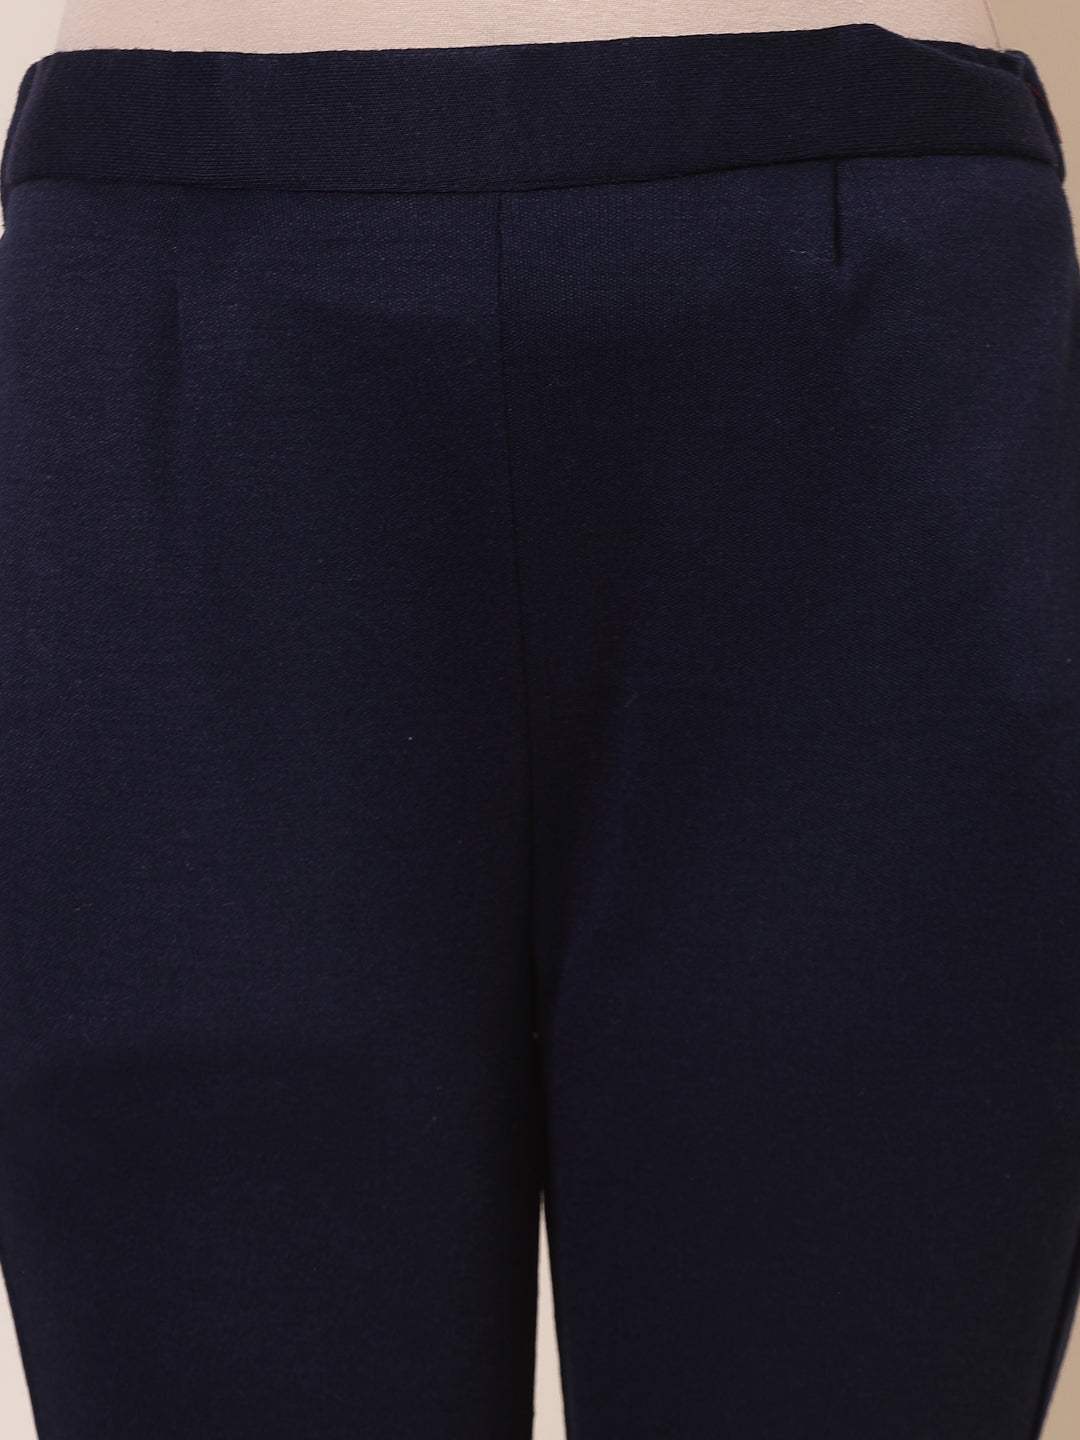 Dark Grey & Navy Blue Solid Woollen Trouser (Pack of 2)